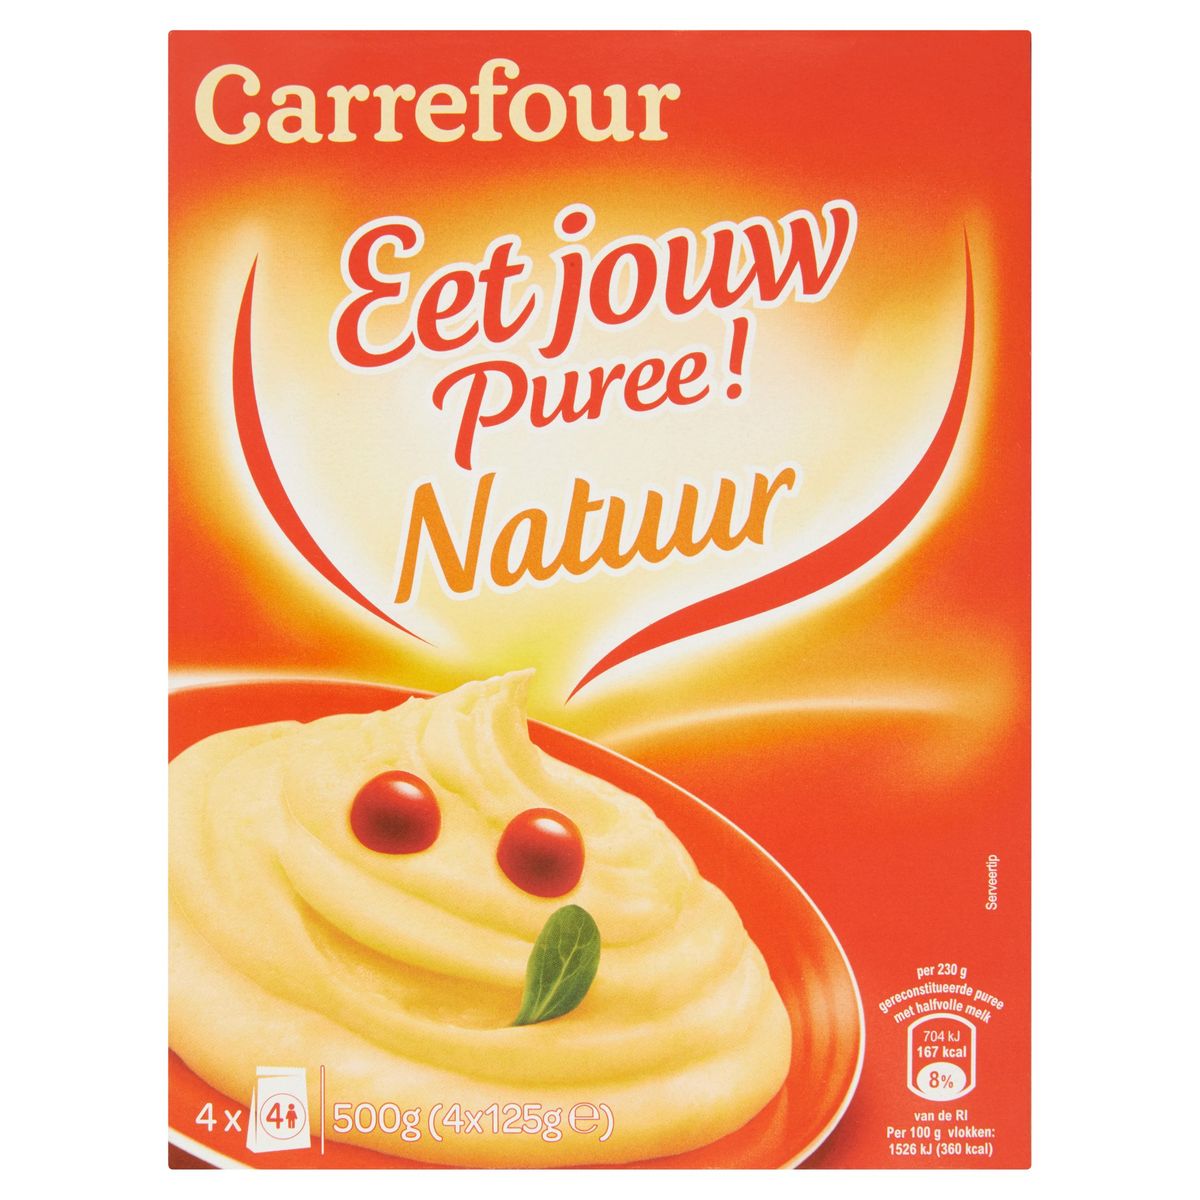 Carrefour Eet Jouw Puree ! Natuur 4 x 125 g